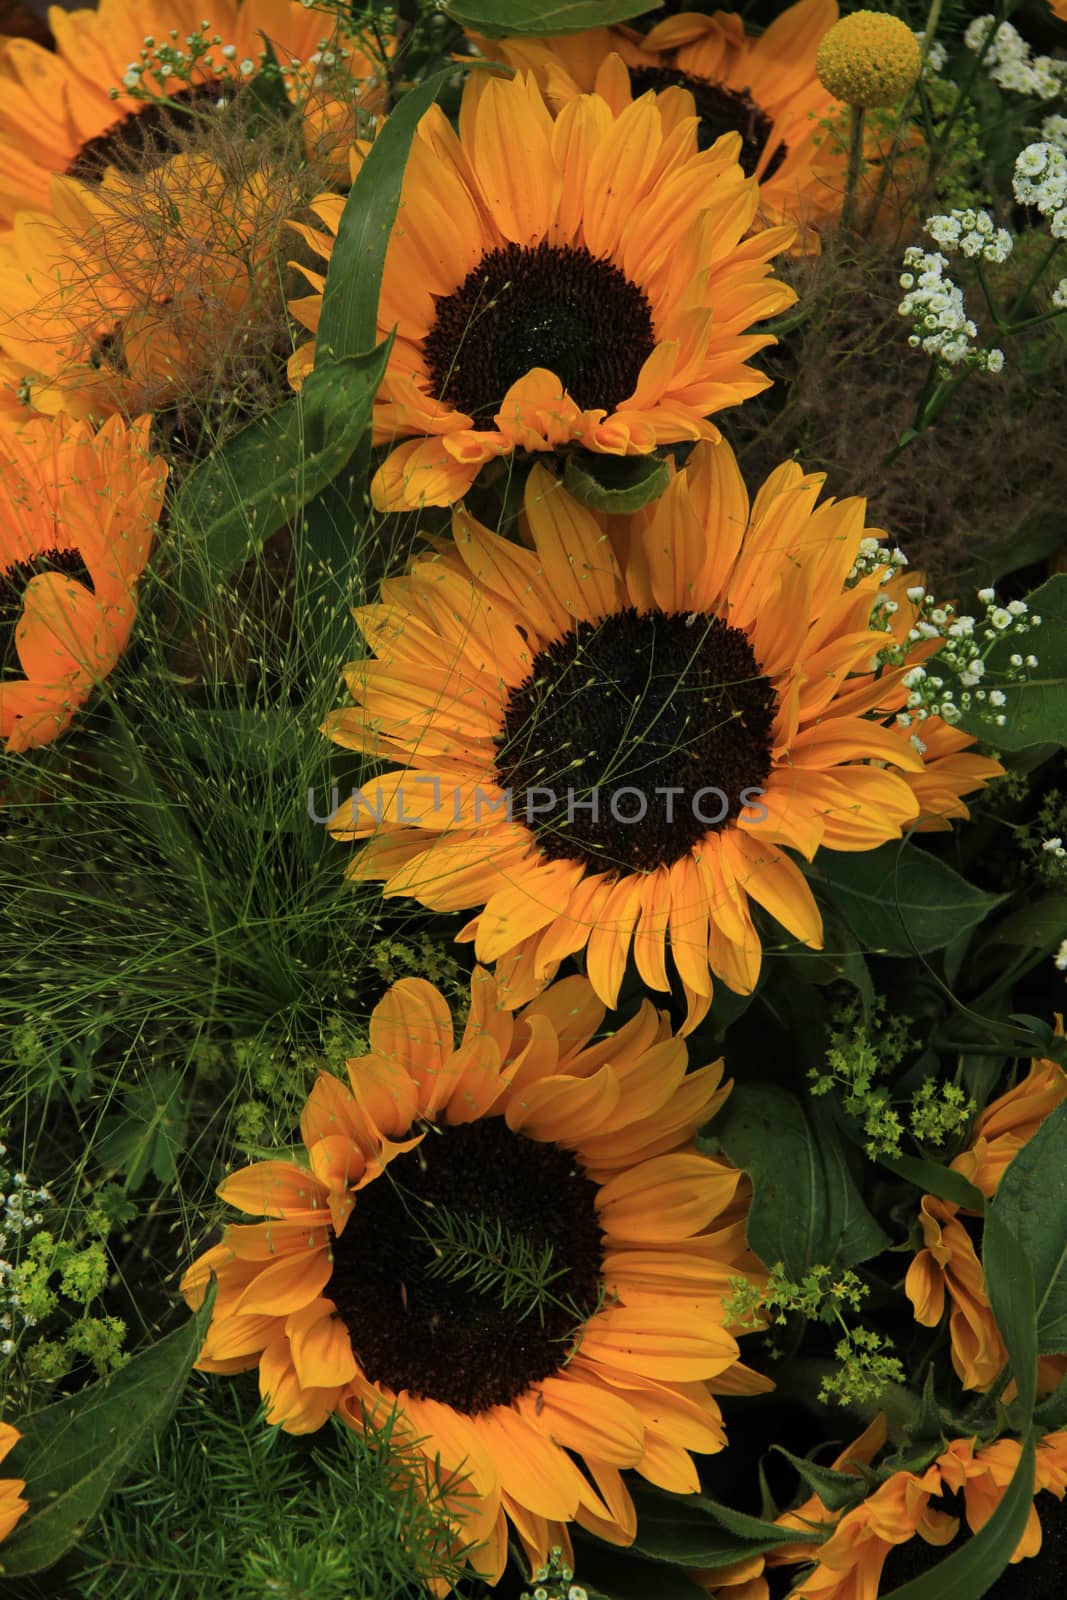 Big yellow sunflowers in a wedding floral arrangement